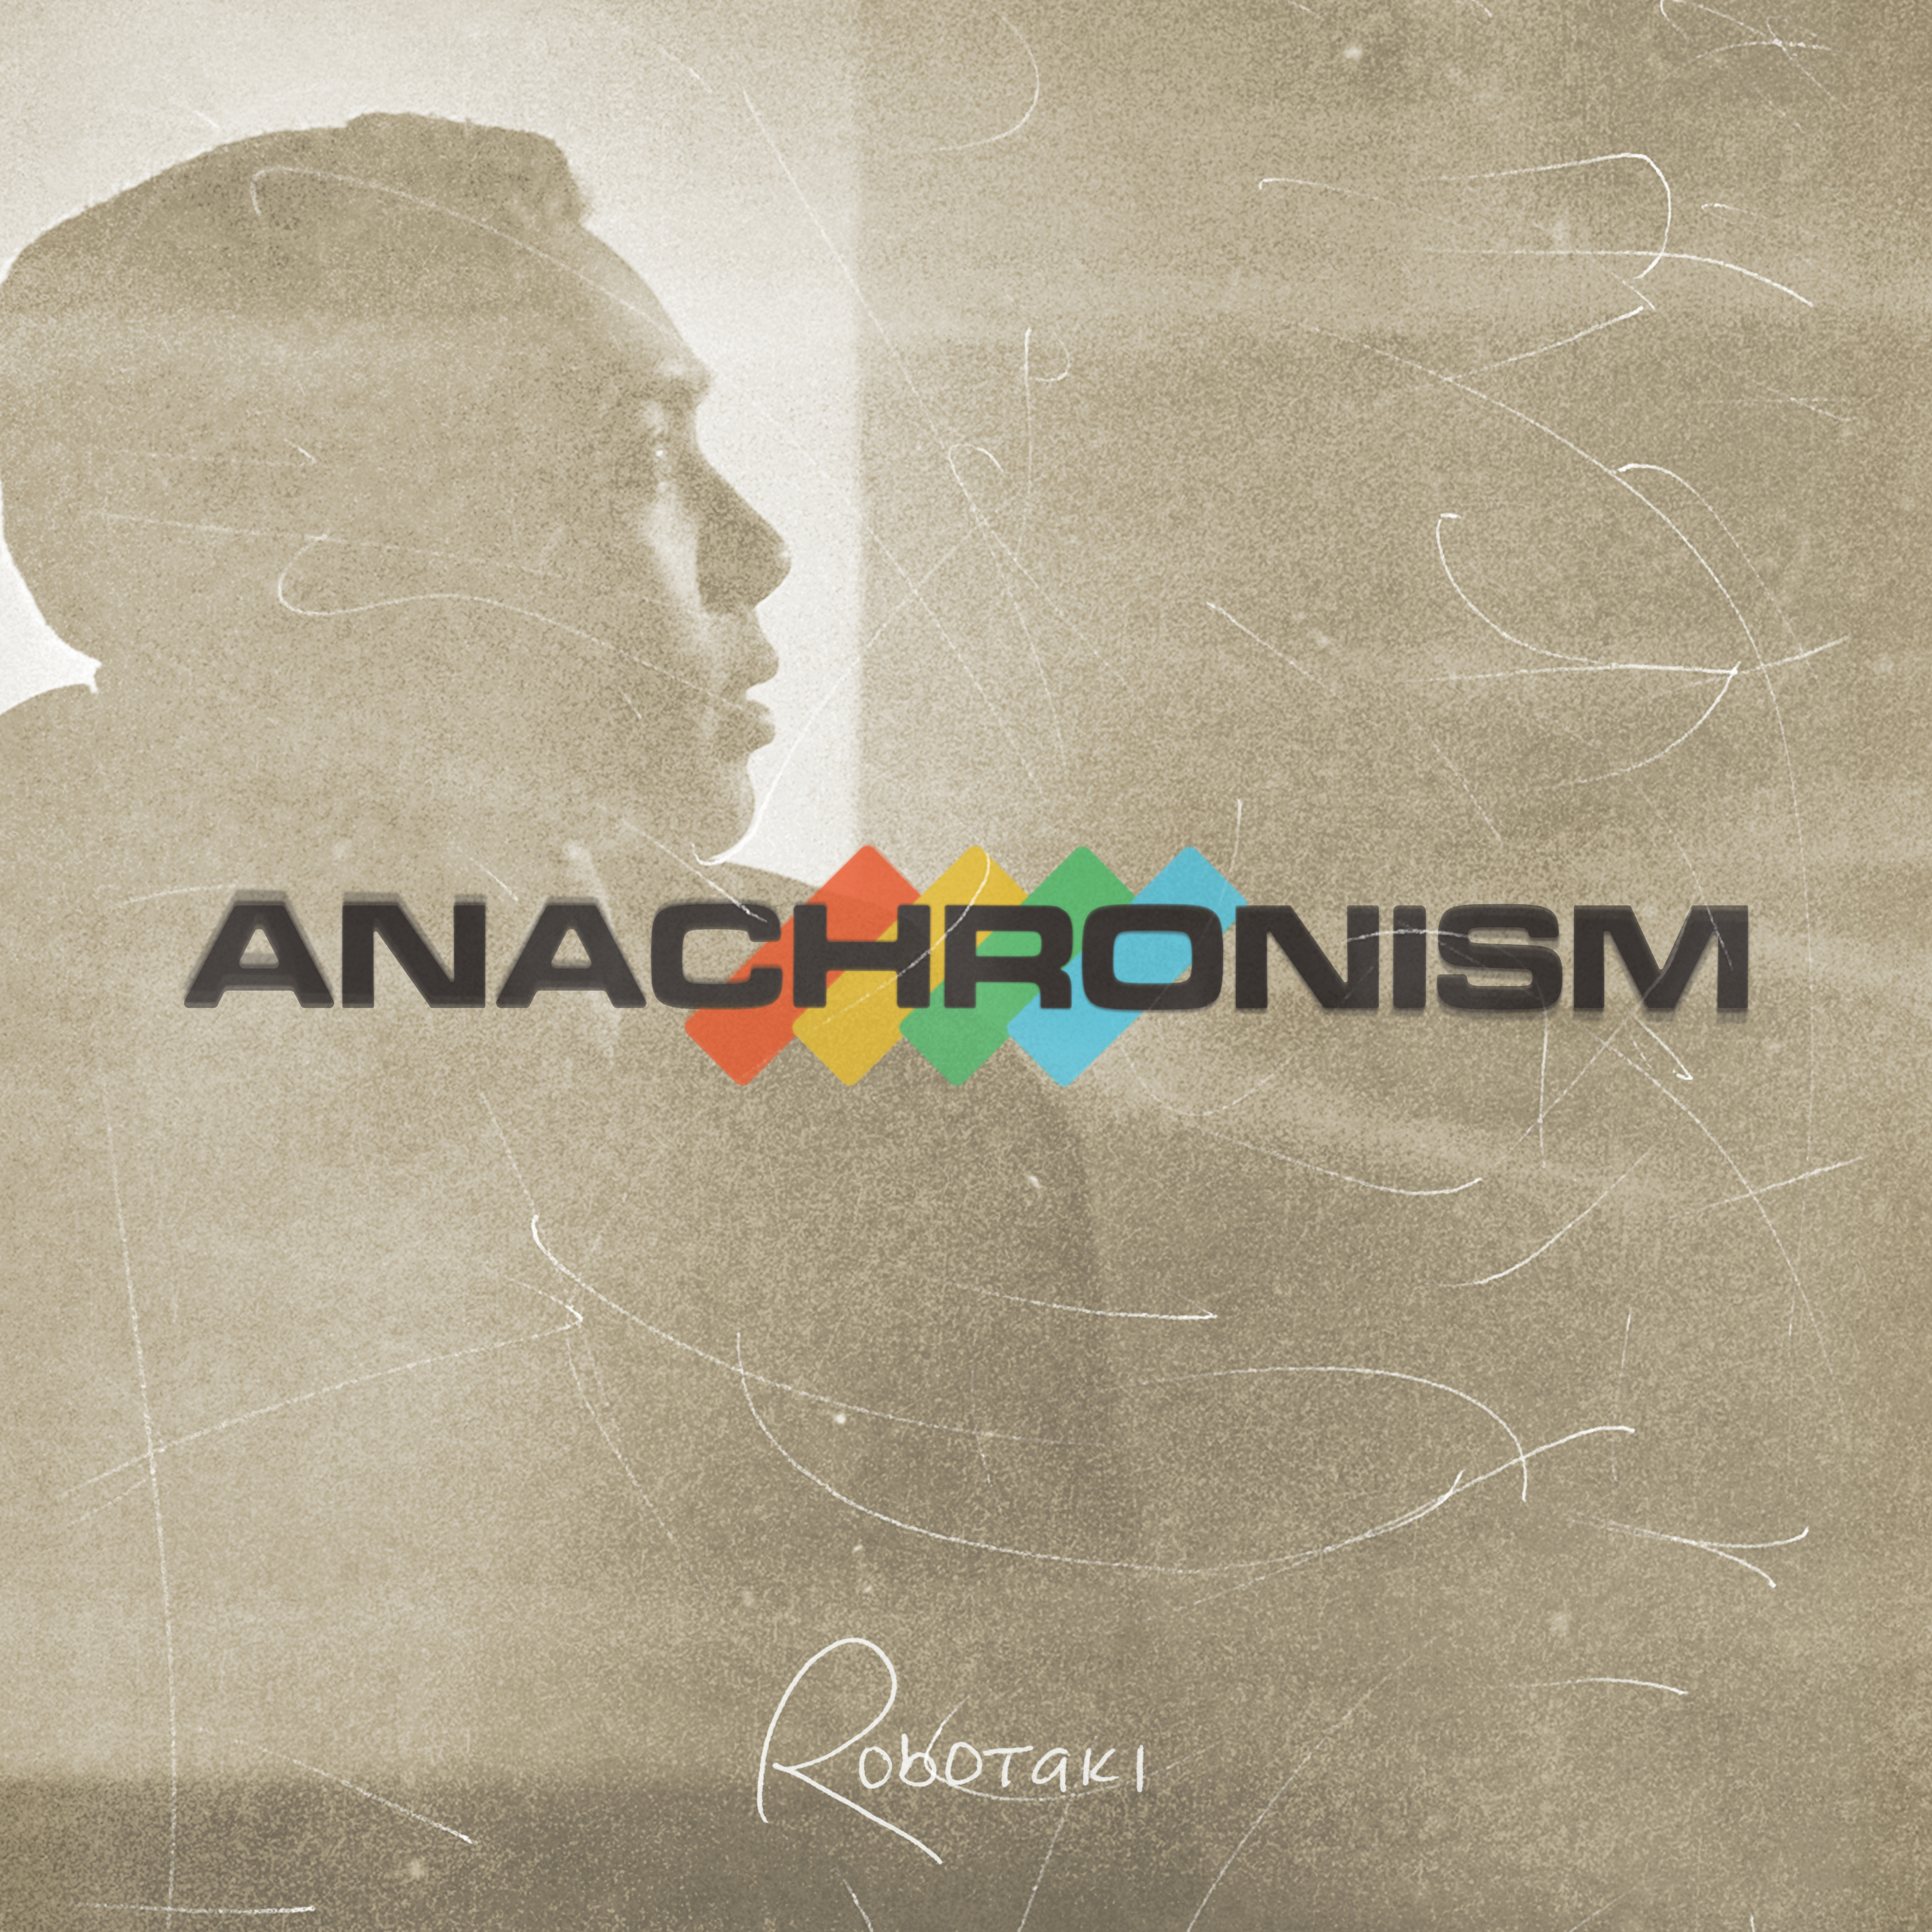 Raw and emotive, Robotaki delivers the stunning ‘Anachronism’ EP